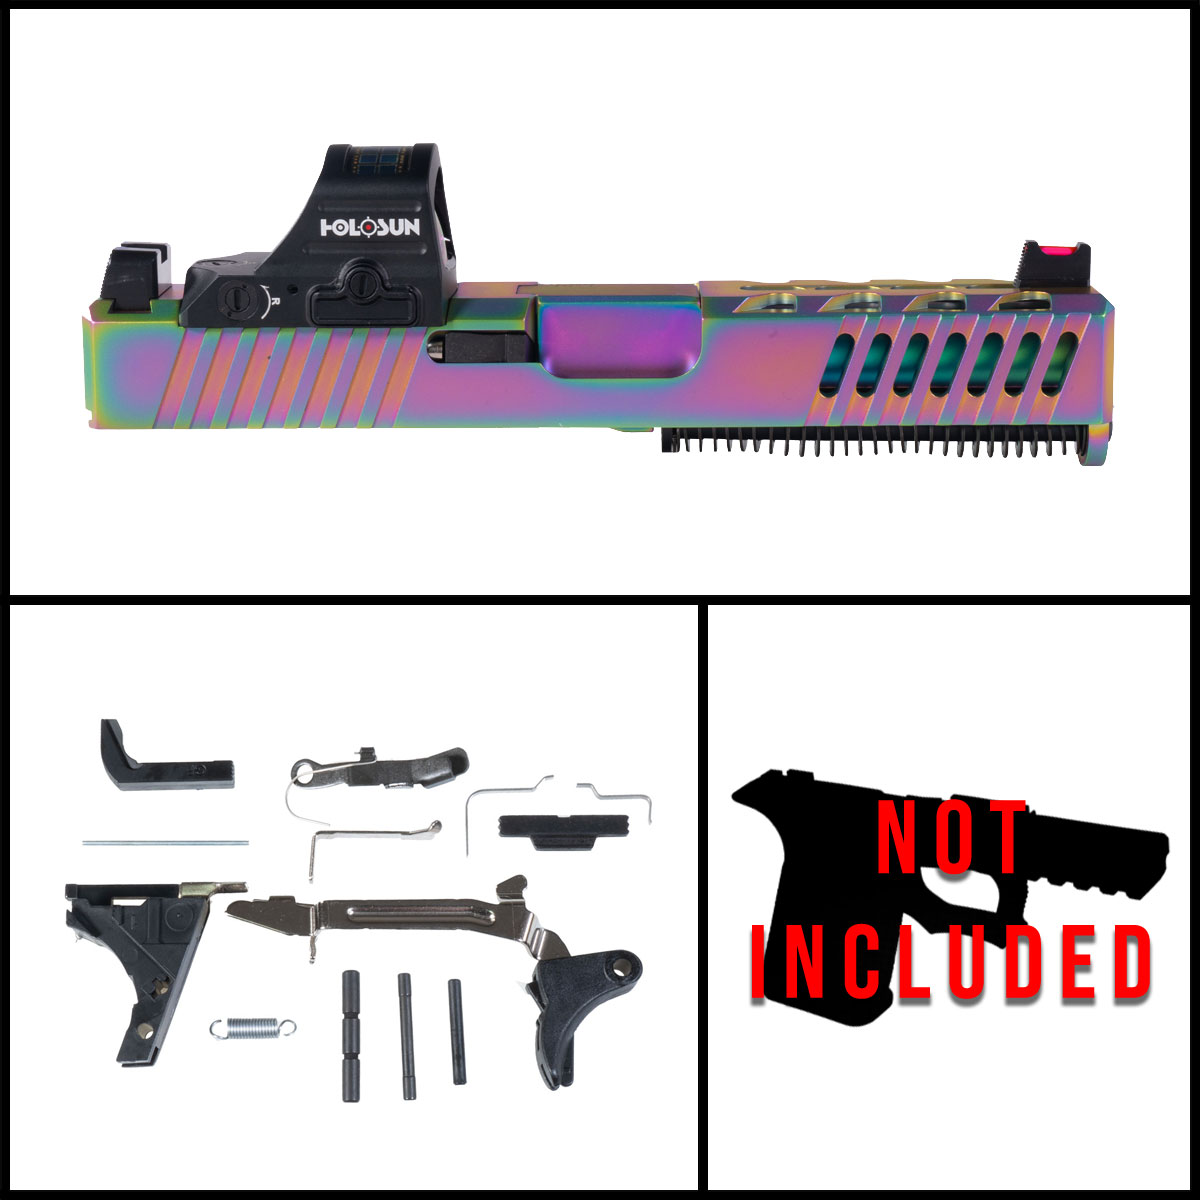 OTD 'ArcLight w/ HS507C-X2' 9mm Full Pistol Build Kits (Everything Minus Frame) - Glock 19 Gen 1-2 Compatible